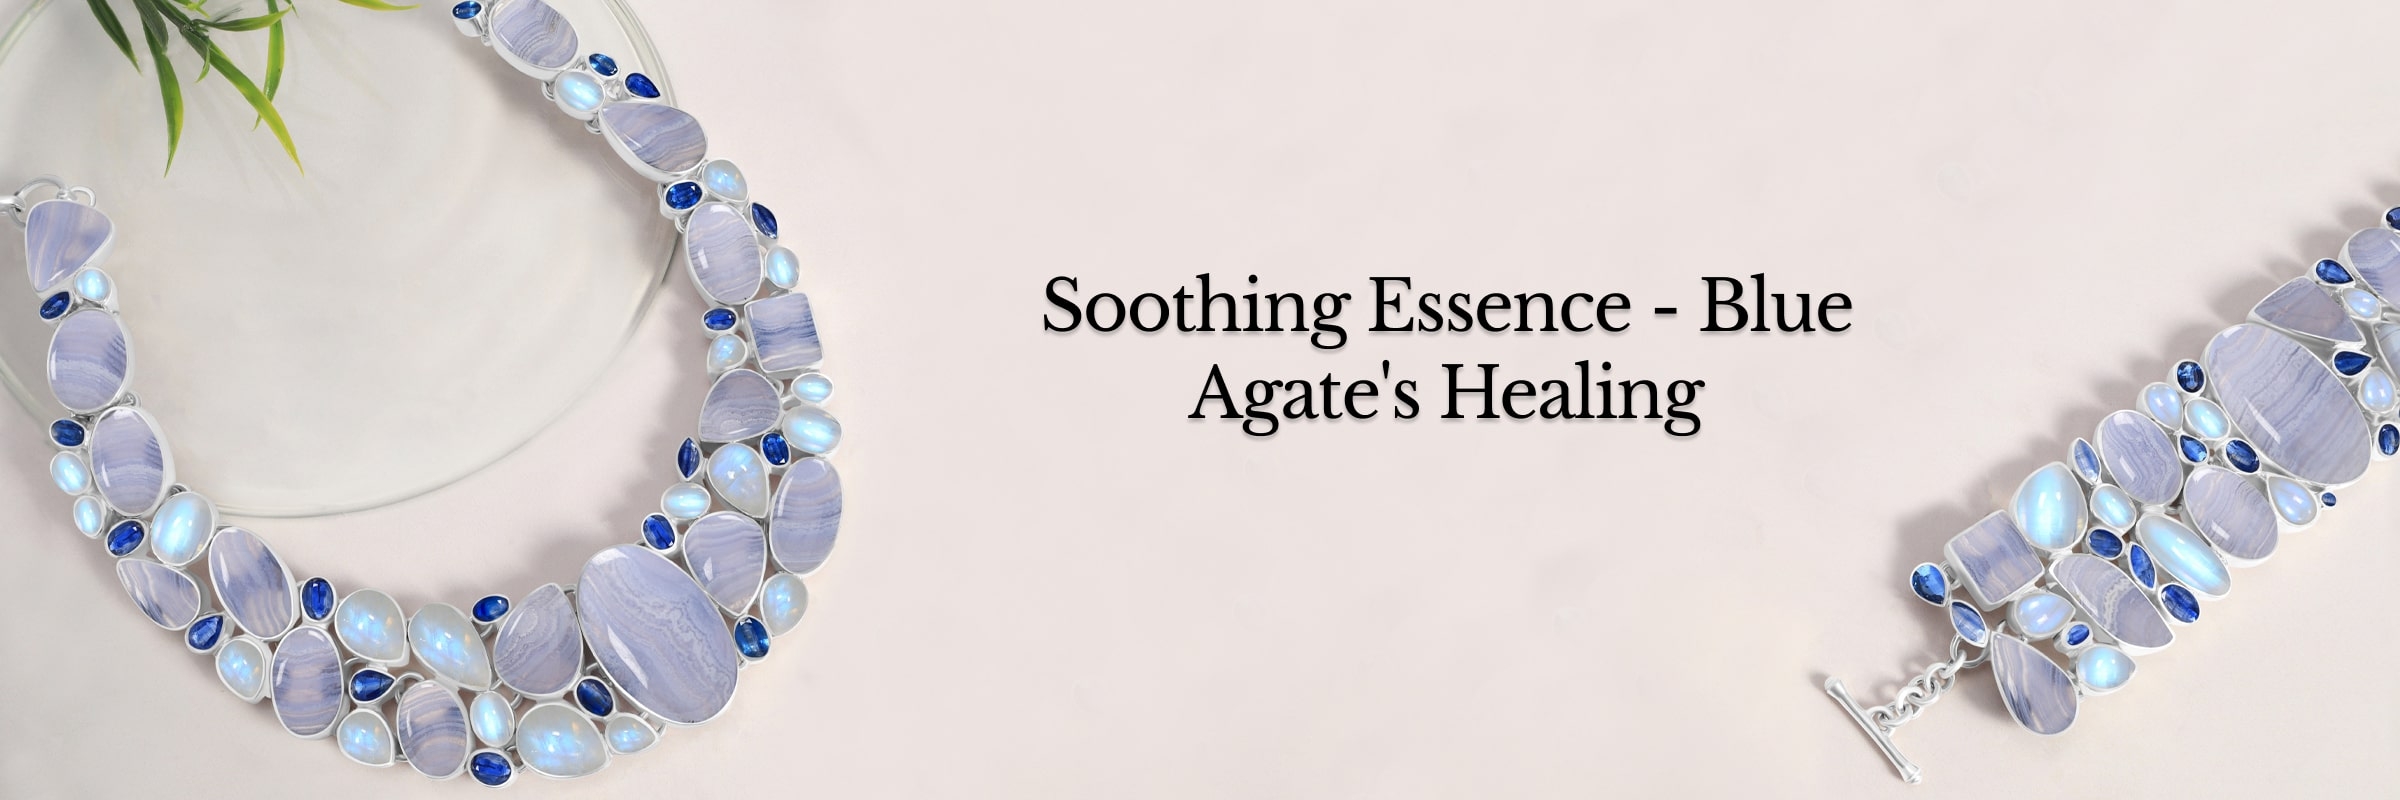 Healing properties of blue agate